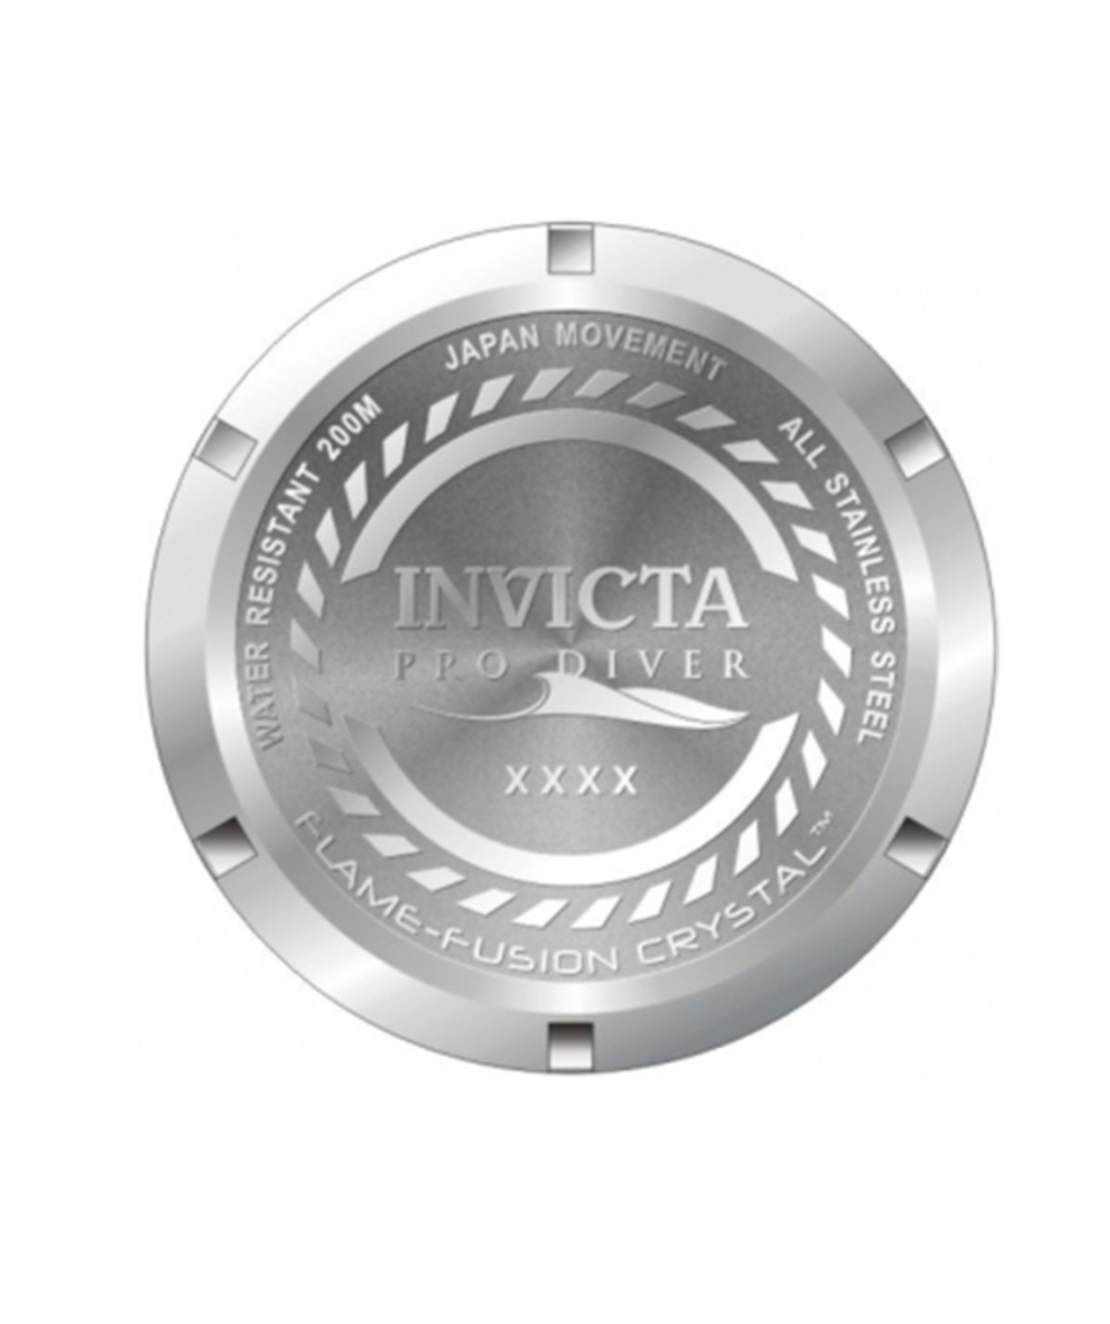 שעון Invicta Pro Diver לגבר דגם 1774